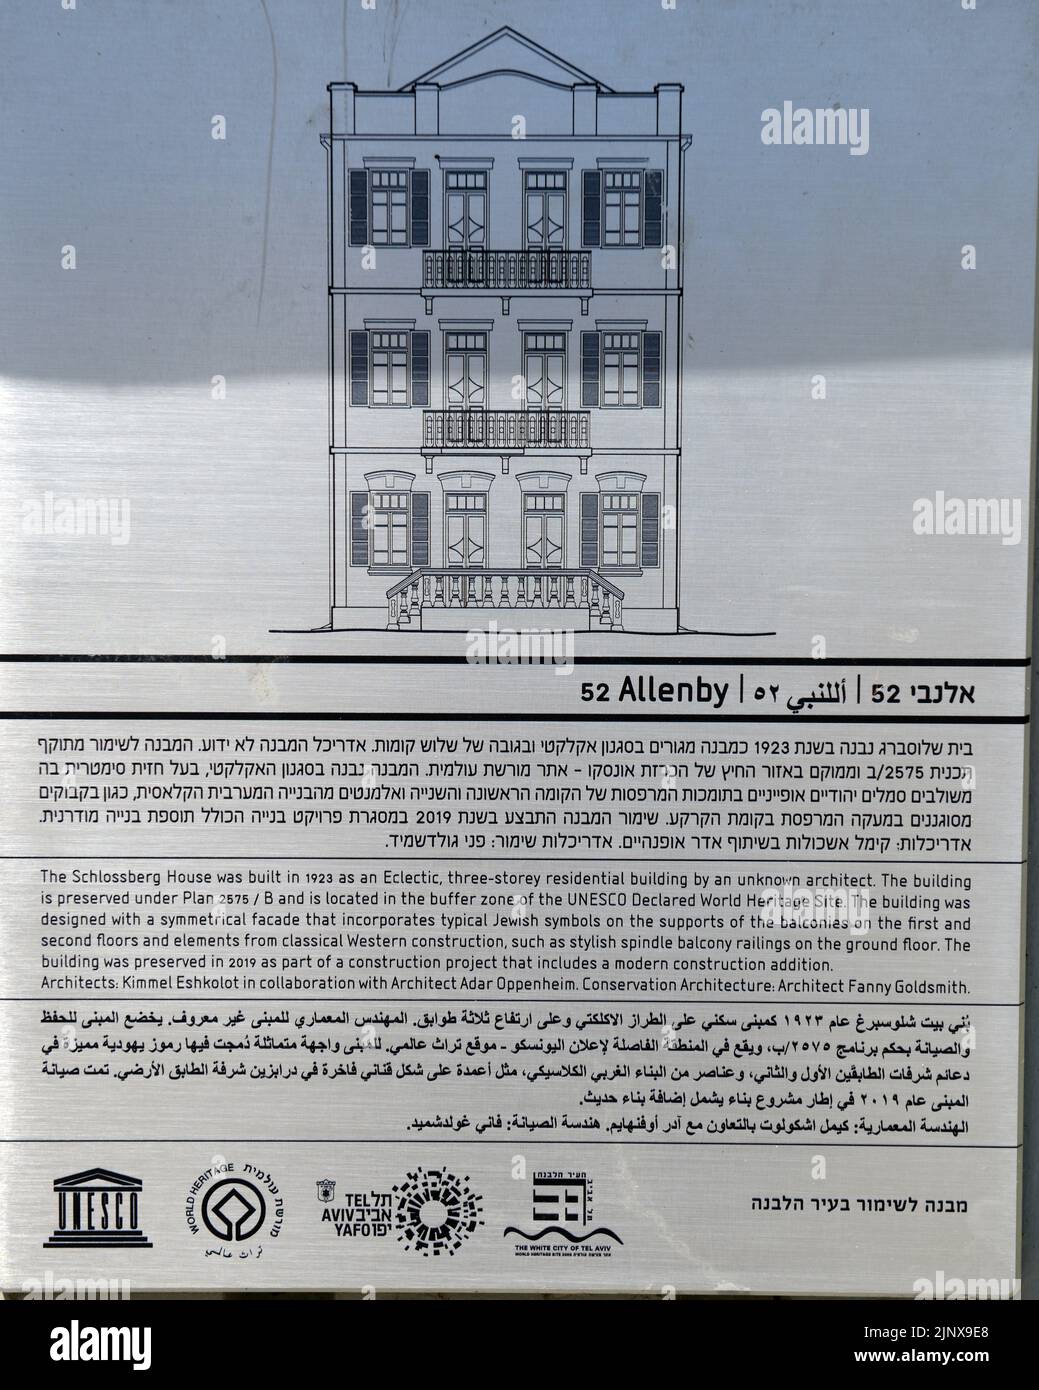 Un cartel explicativo sobre la histórica casa Schlossberg en Allenby 52 St en Tel Aviv, Israel. Foto de stock